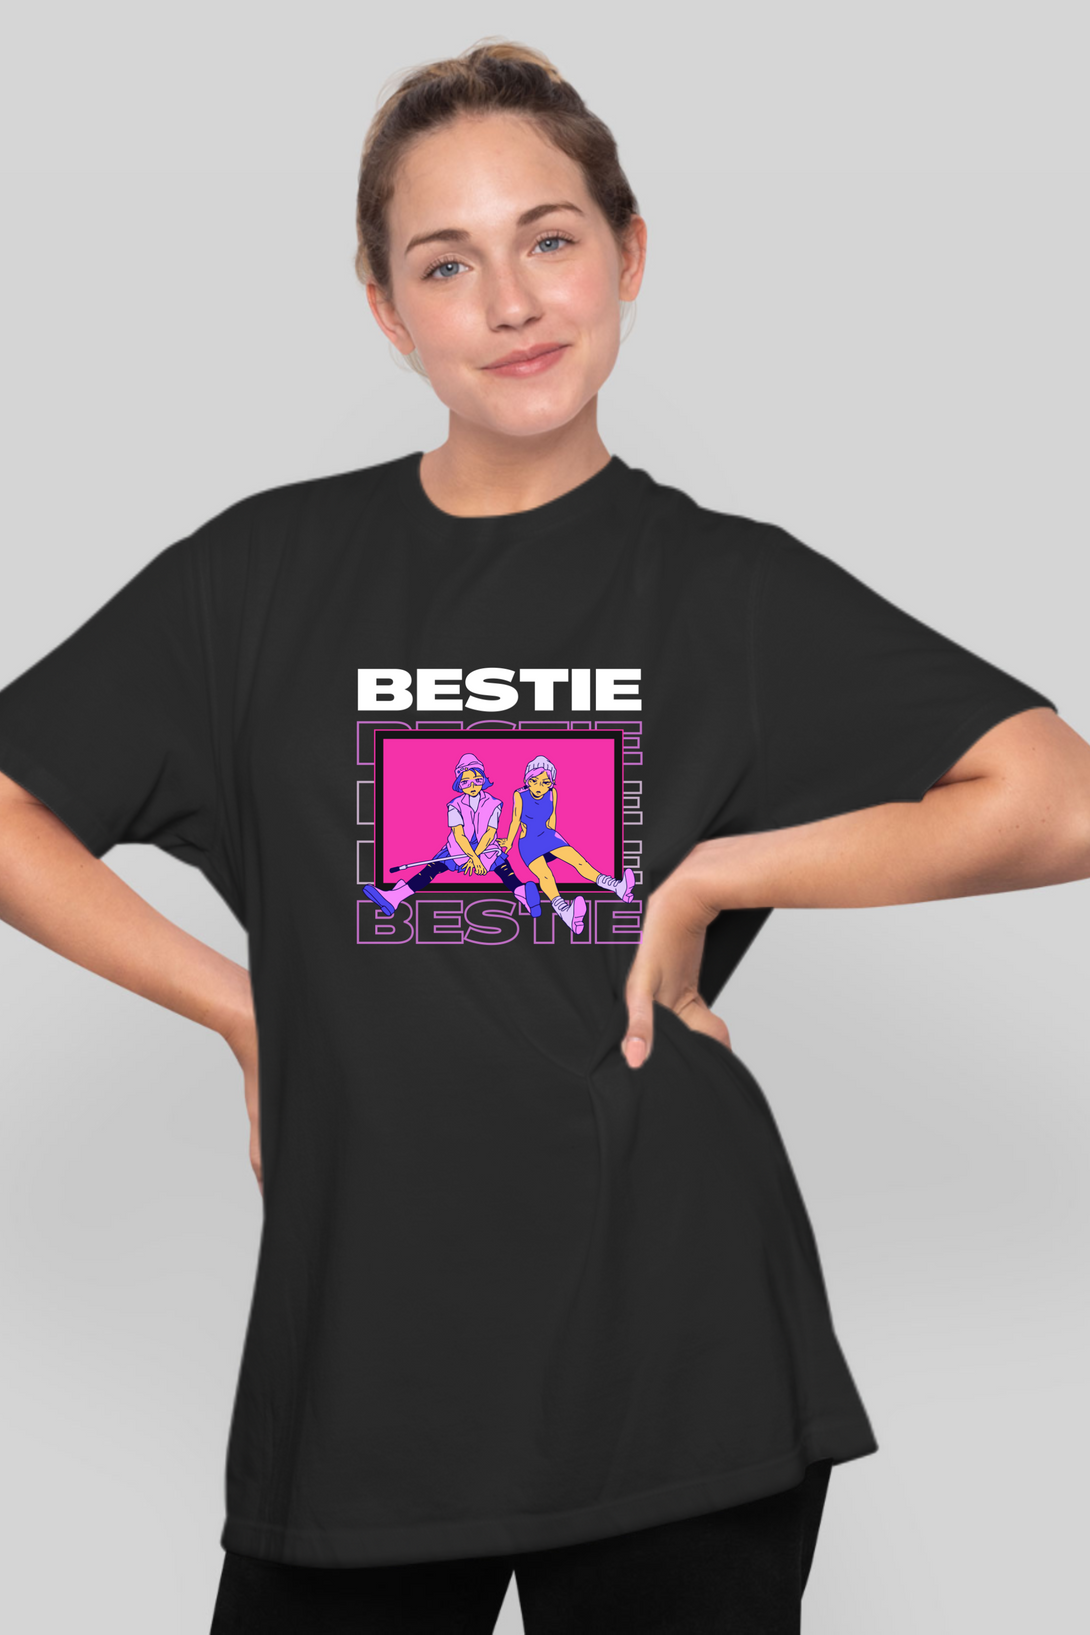 Bestie Bliss Printed Oversized T-Shirt For Women - WowWaves - 7